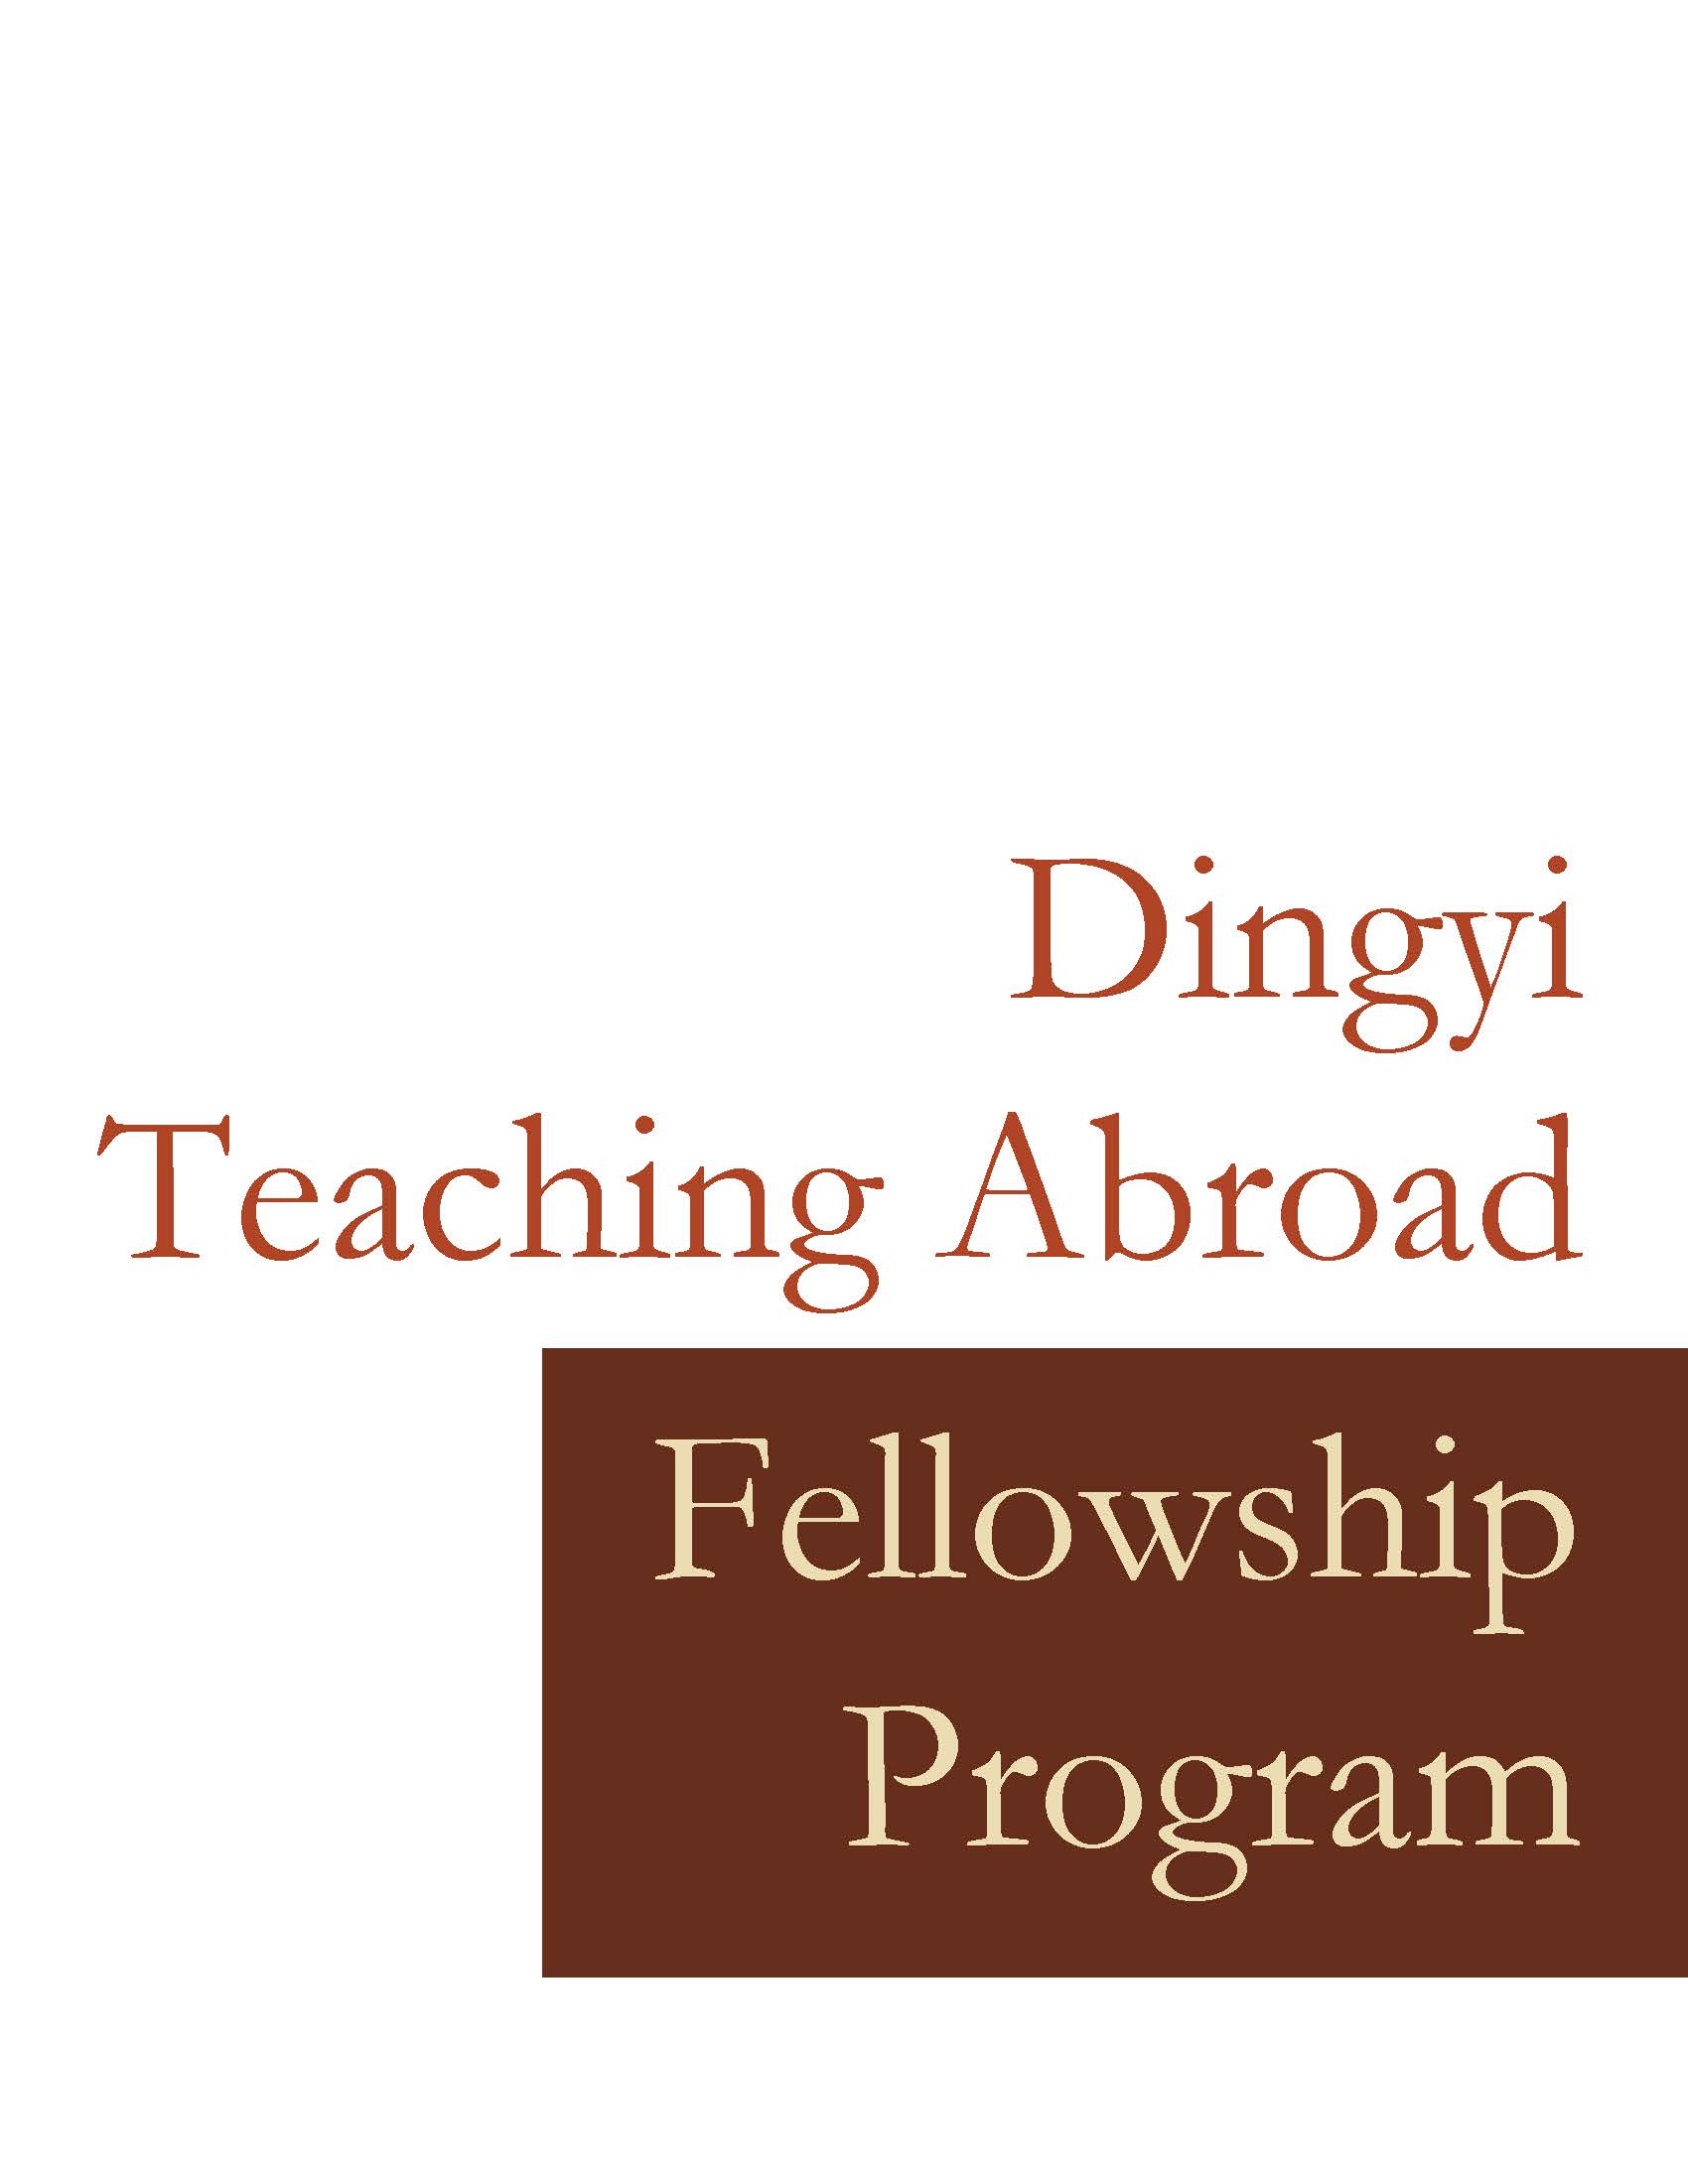 Teaching Abroad Fellowship Program Flyer_Page_1